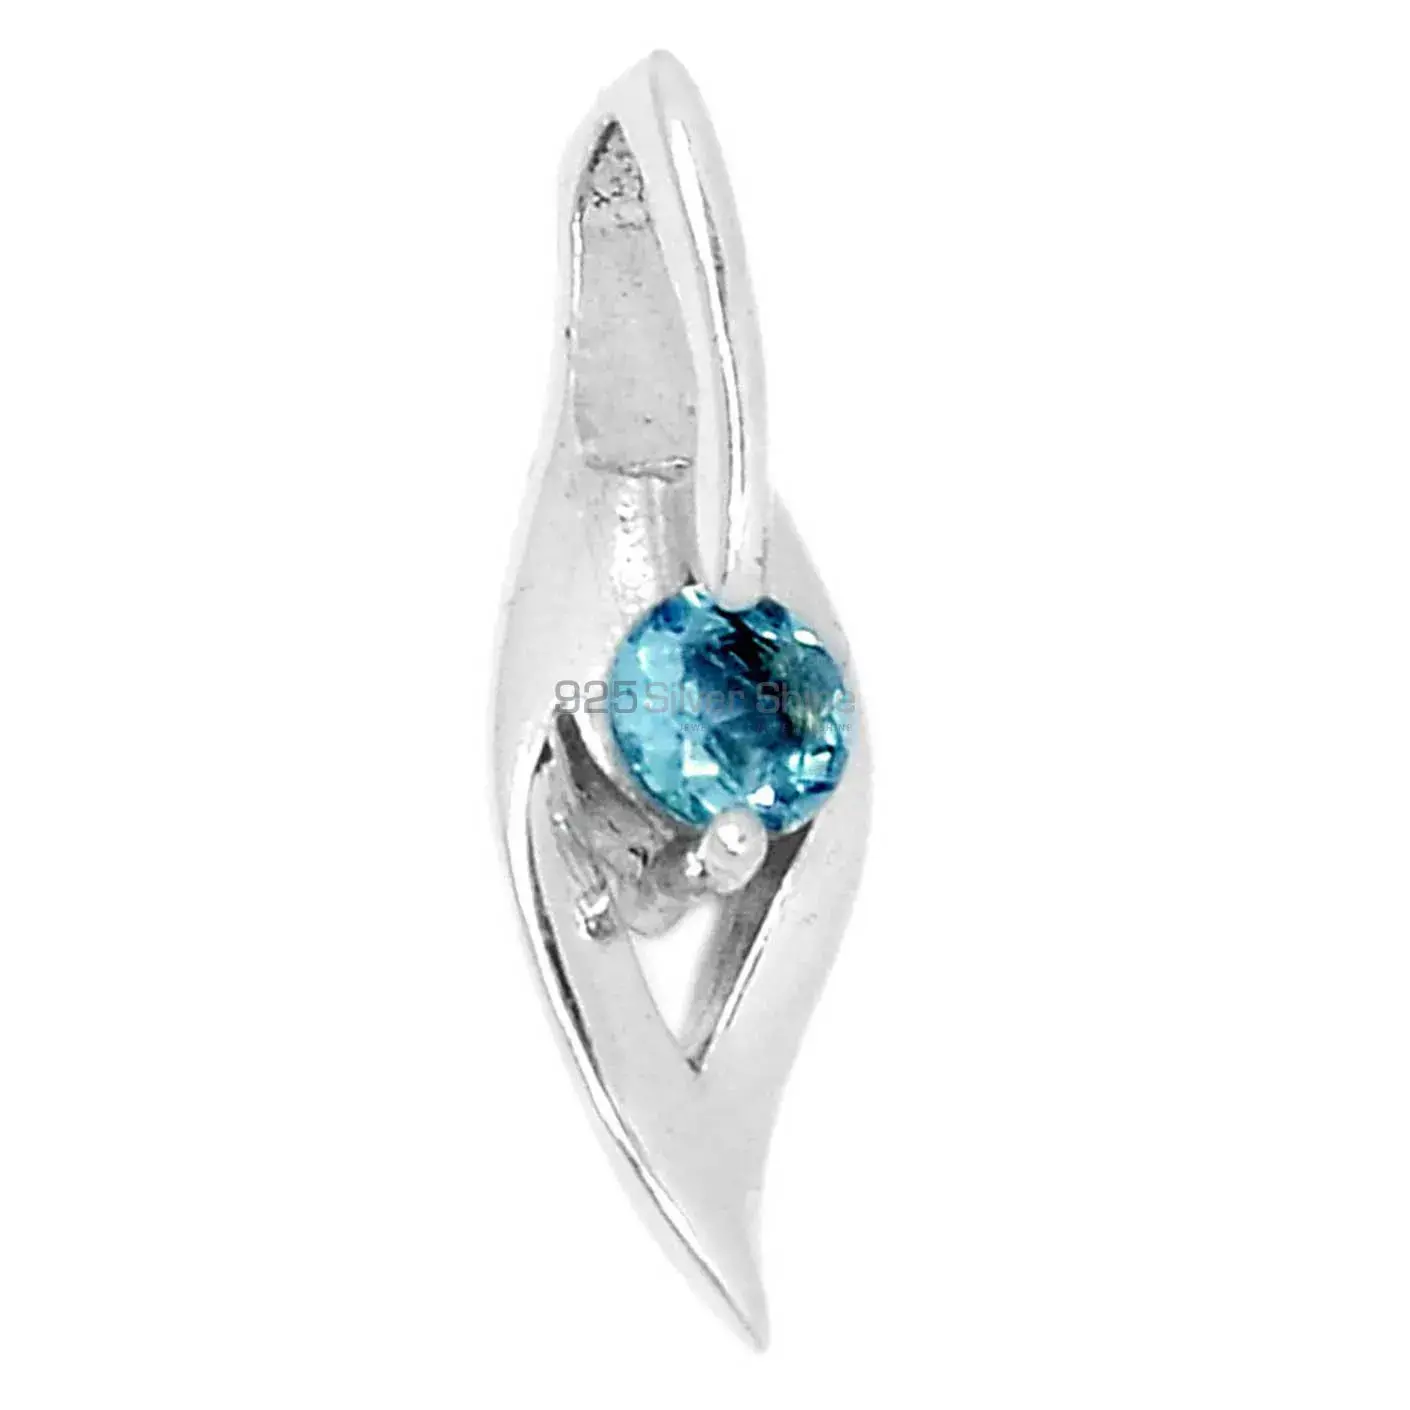 Top Quality 925 Fine Silver Pendants Suppliers In Blue Topaz Gemstone Jewelry 925SP280-5_1